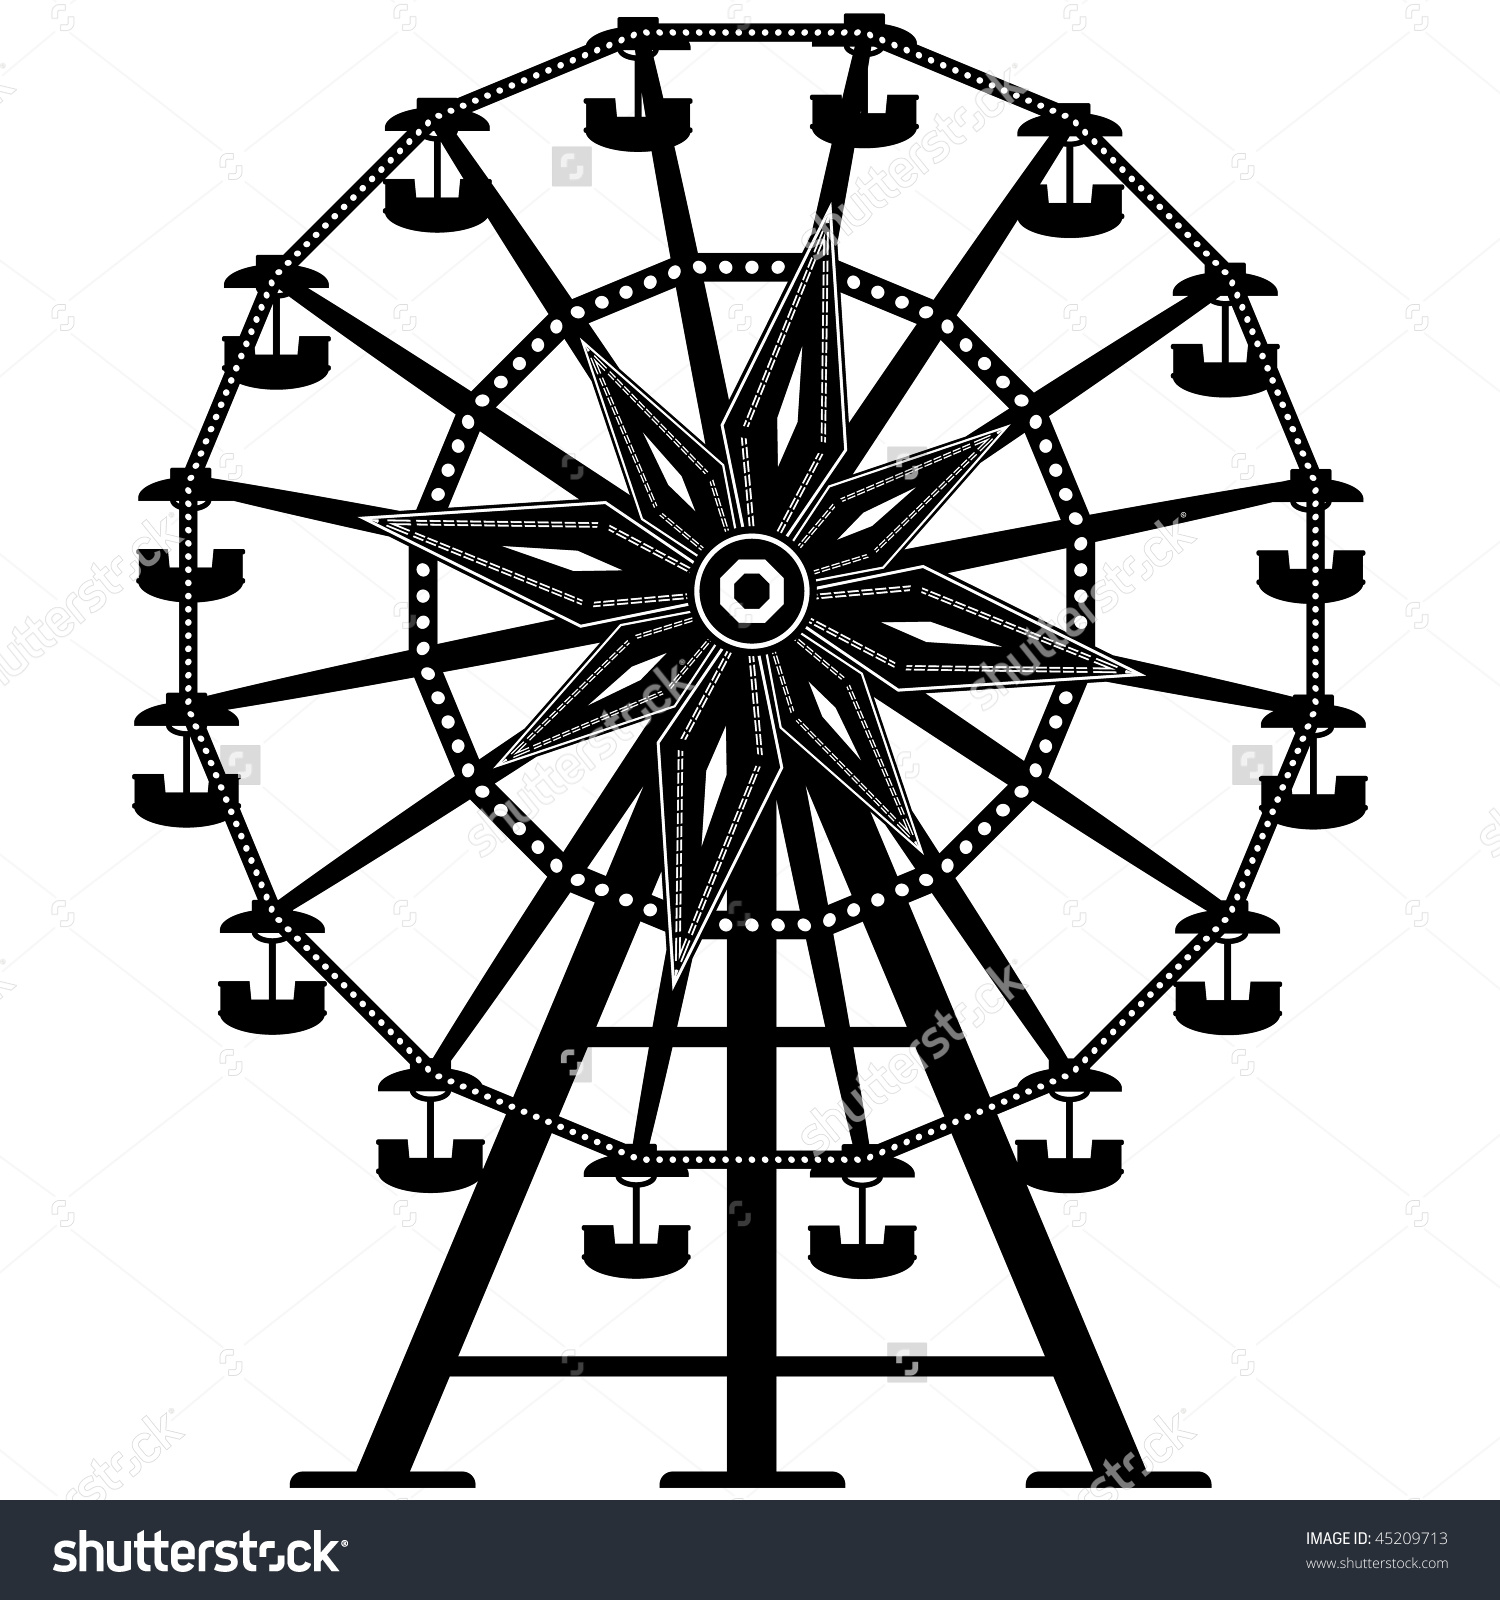 Free Ferris Wheel Silhouette Vector, Download Free Clip Art